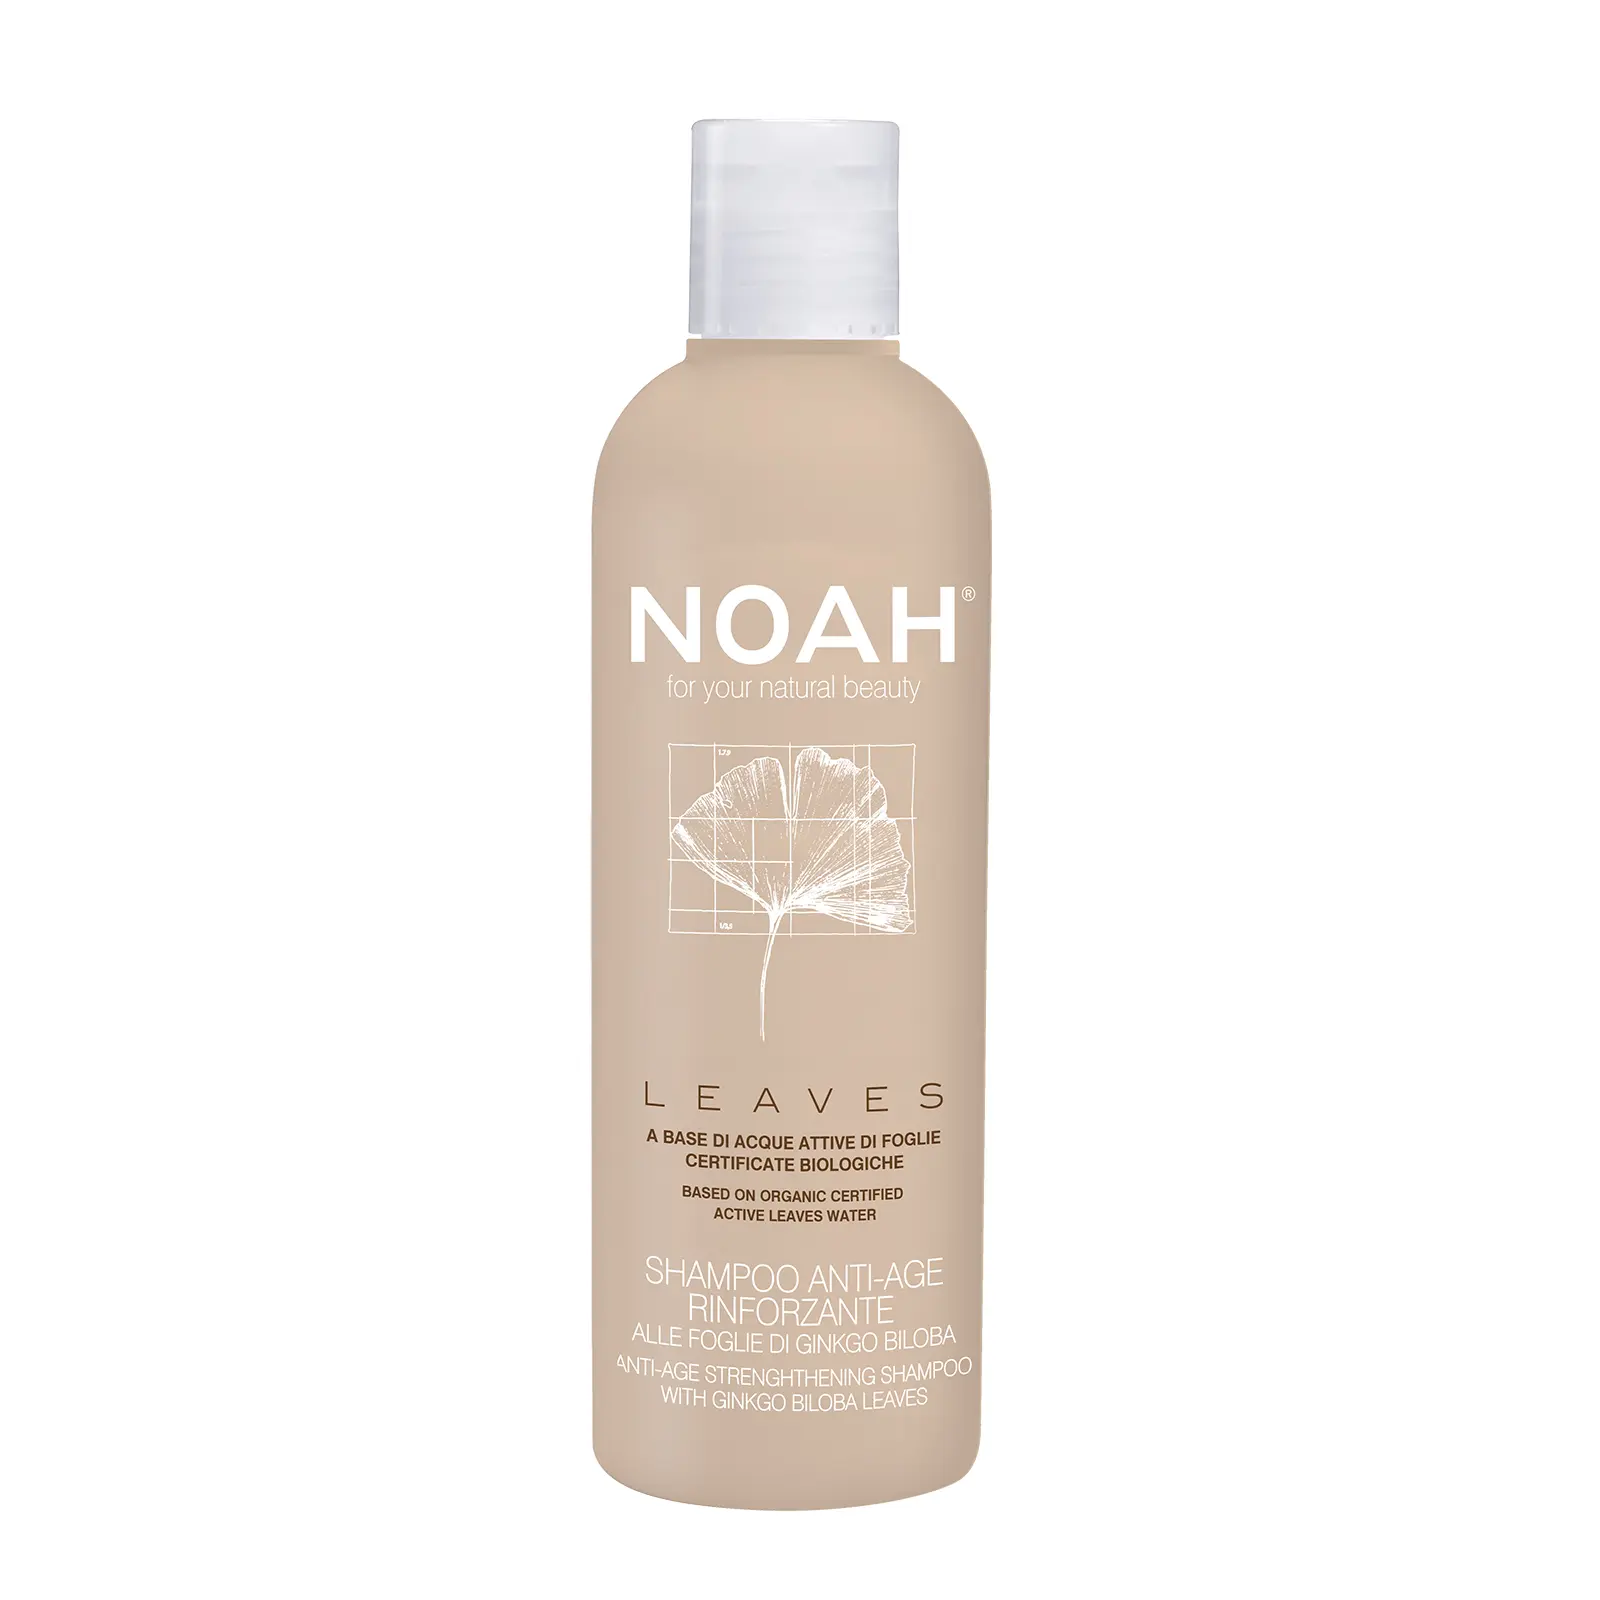 Leaves-Shampoo-antiage-NOAH